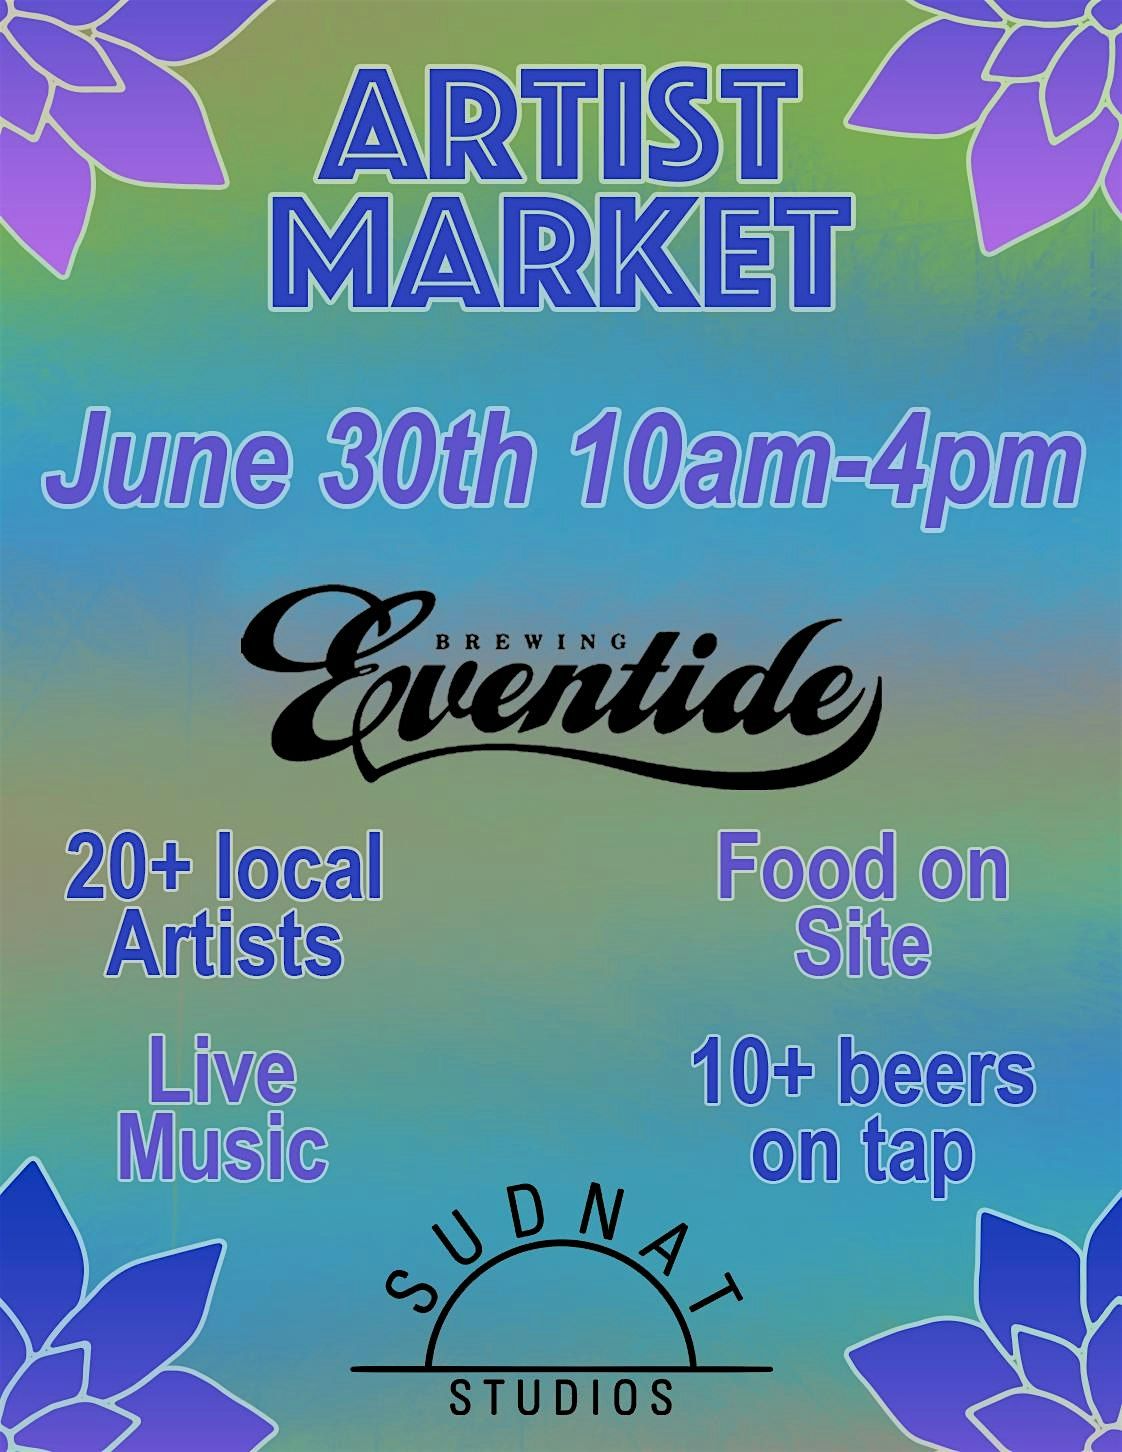 Sunday Funday Art Market @ Eventide Brewing